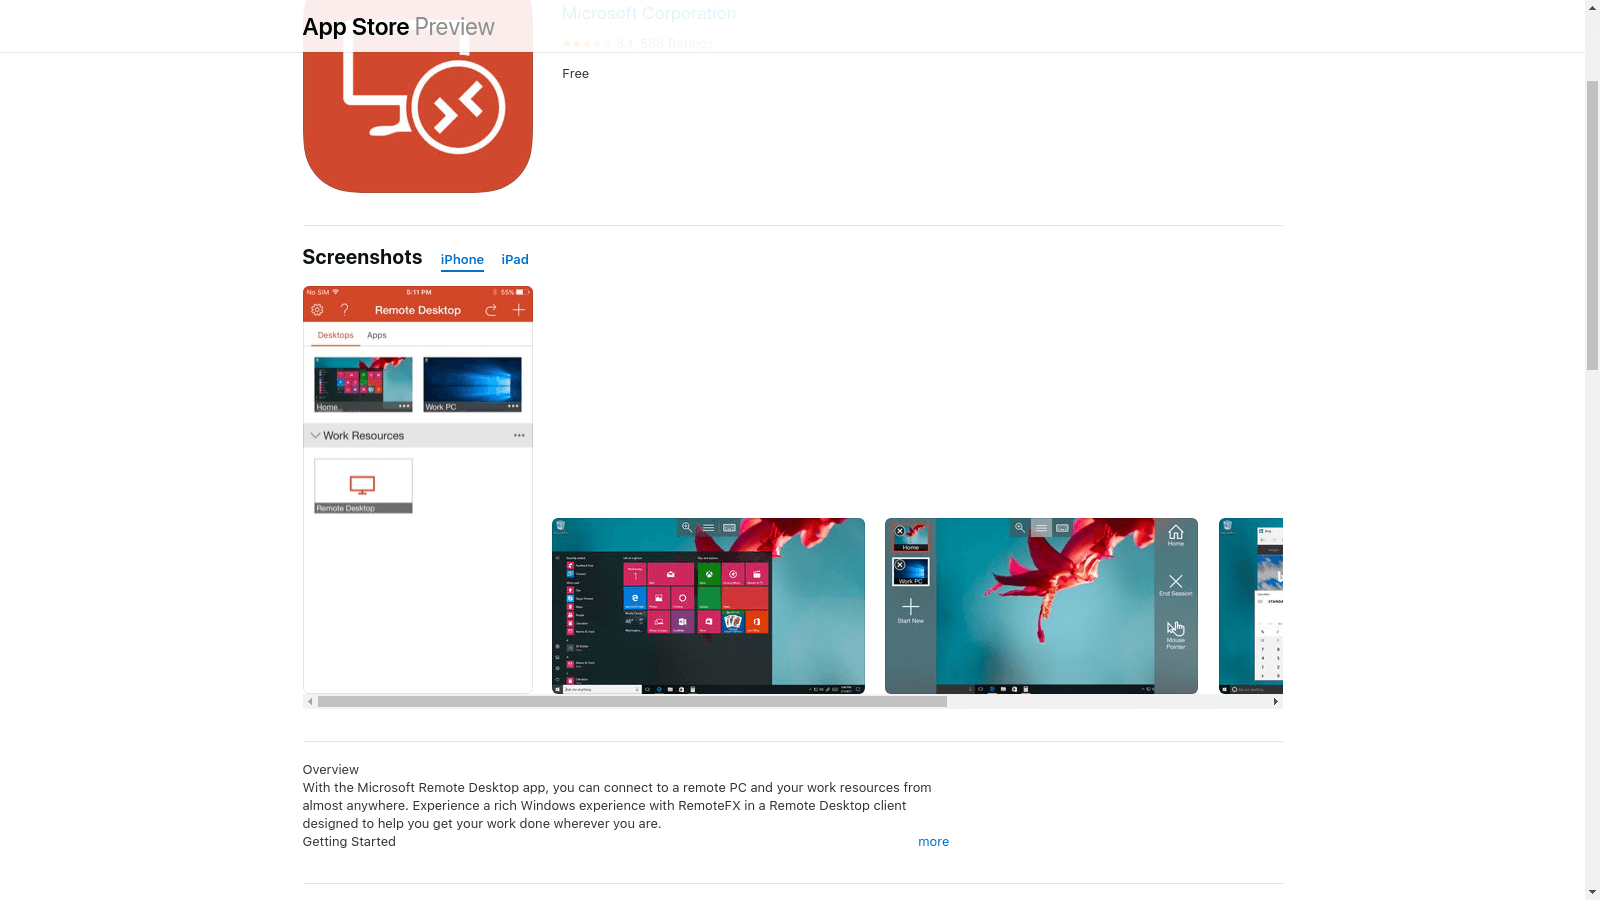 screenshot from Apple App Store showing Microsoft Remote Desktop application